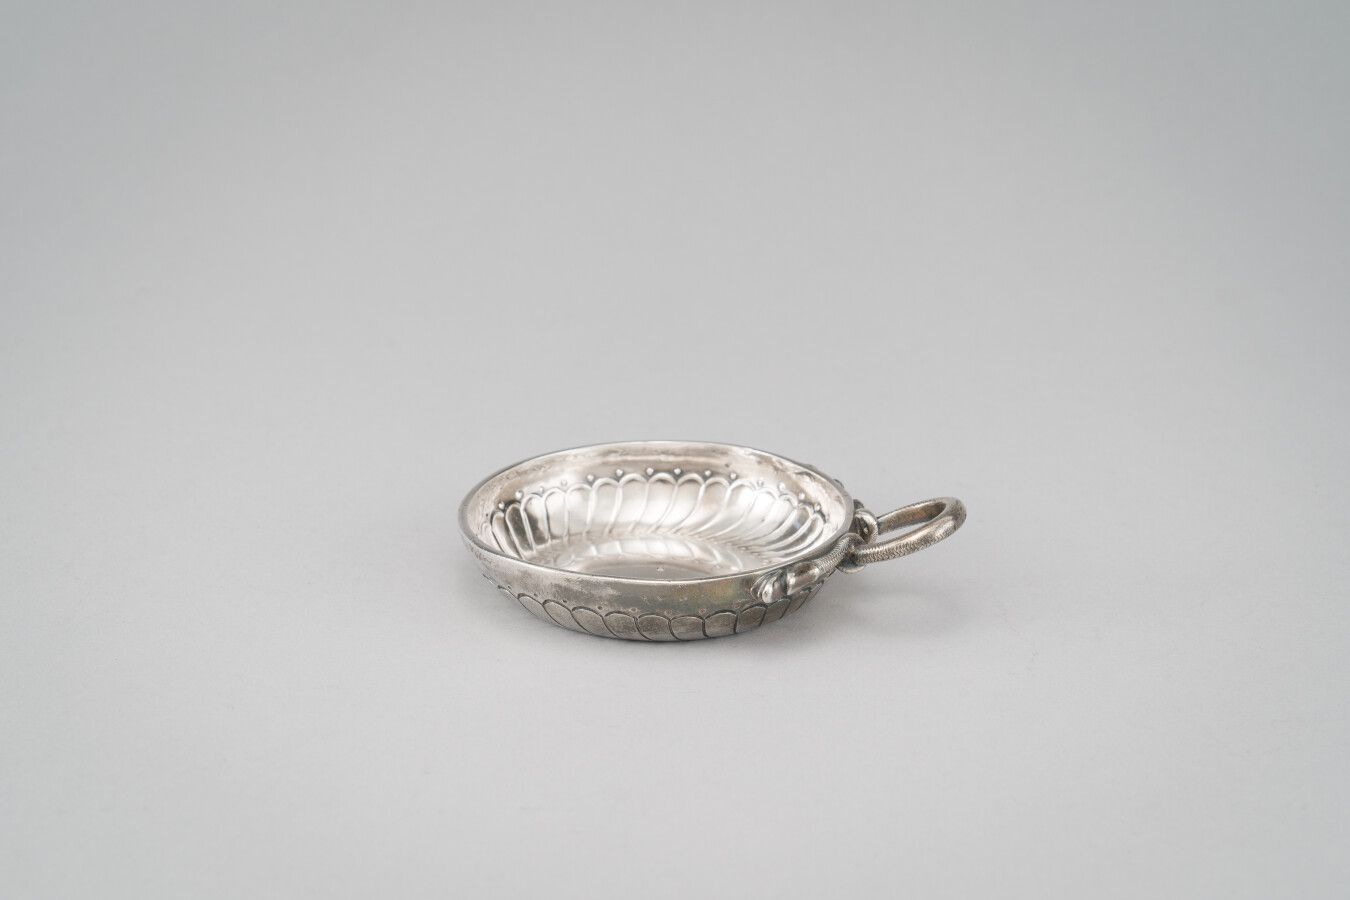 Null 银质品酒器（950/1000），握柄为蛇形，侧面装饰有躯干。刻有 "Claude Hatot"。

重量：142克。

巴黎，1713-1717年。
&hellip;